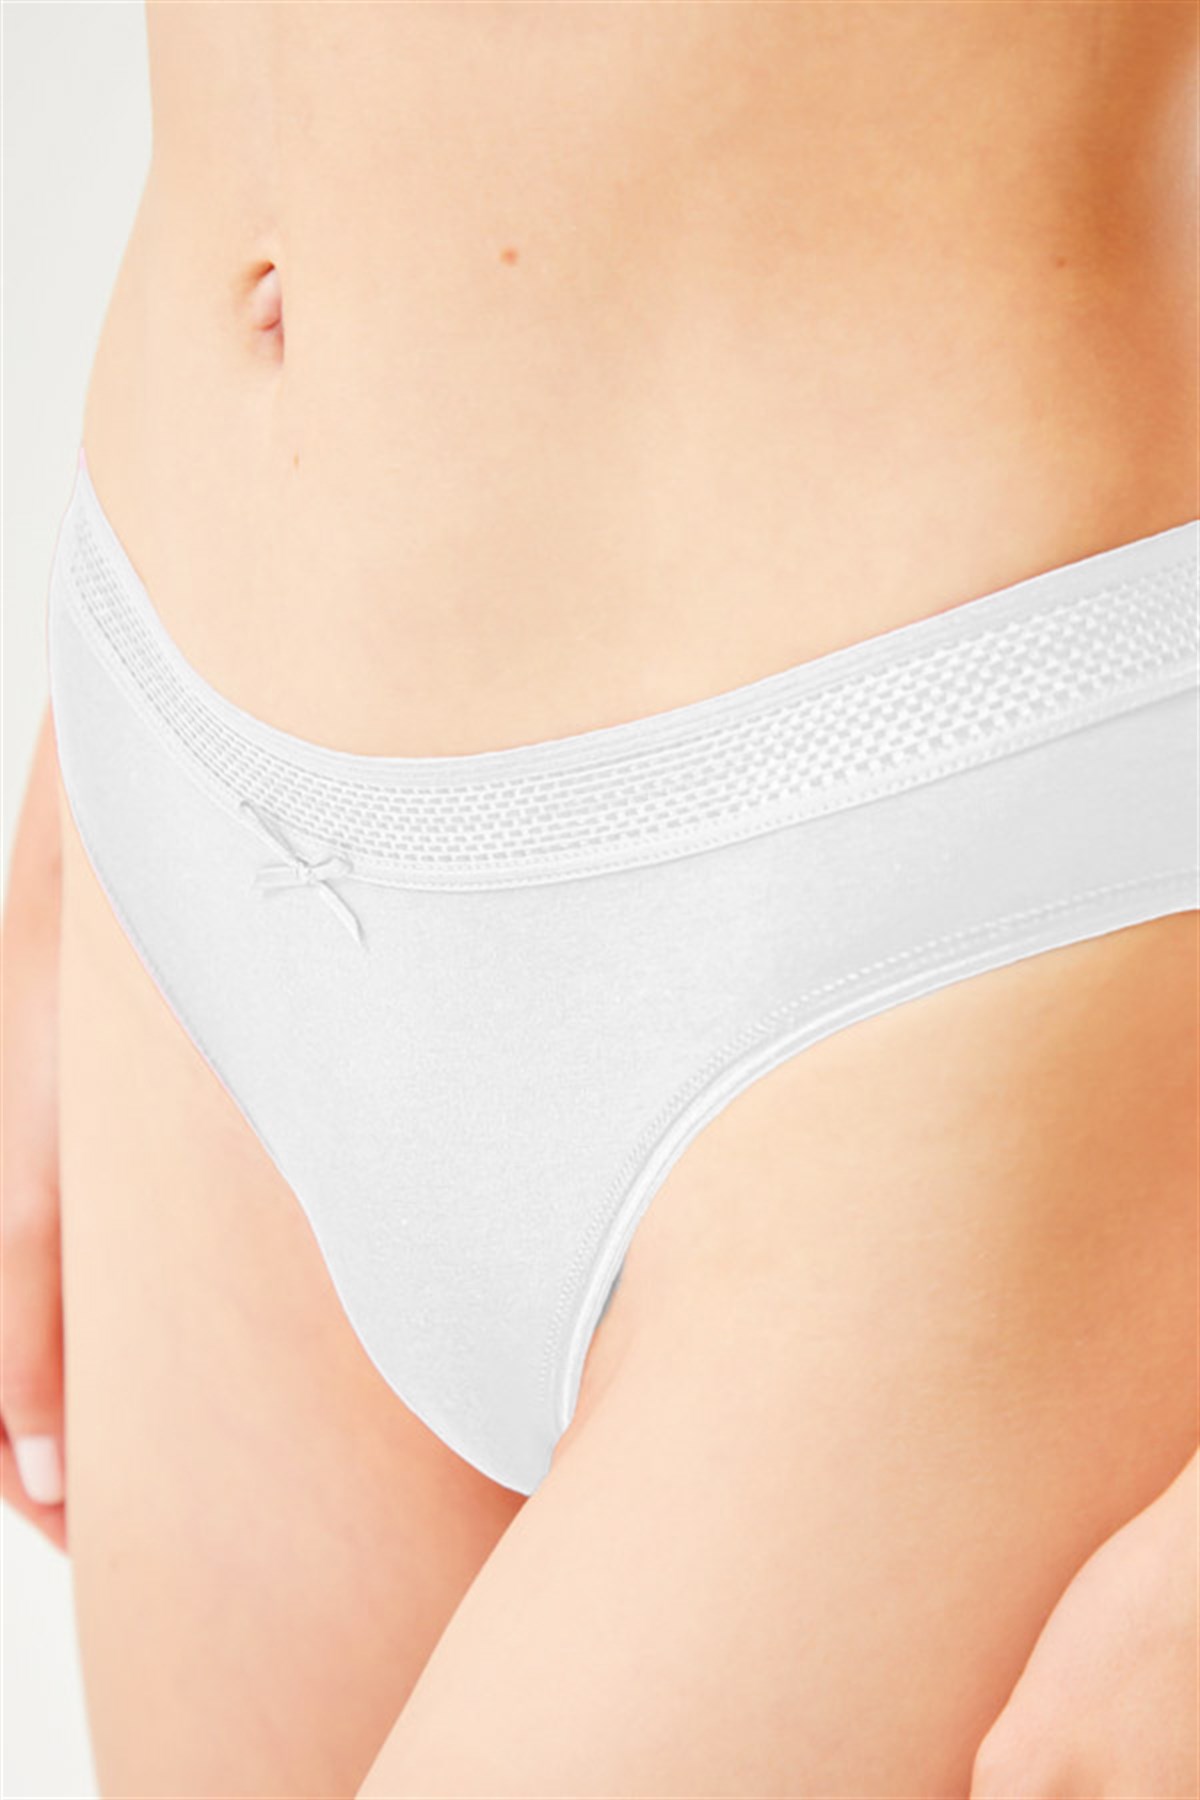 basic-sport-cotton-brazilian-women-panty-with-net-designed-elastic-waistband-ch0336-white-1-5